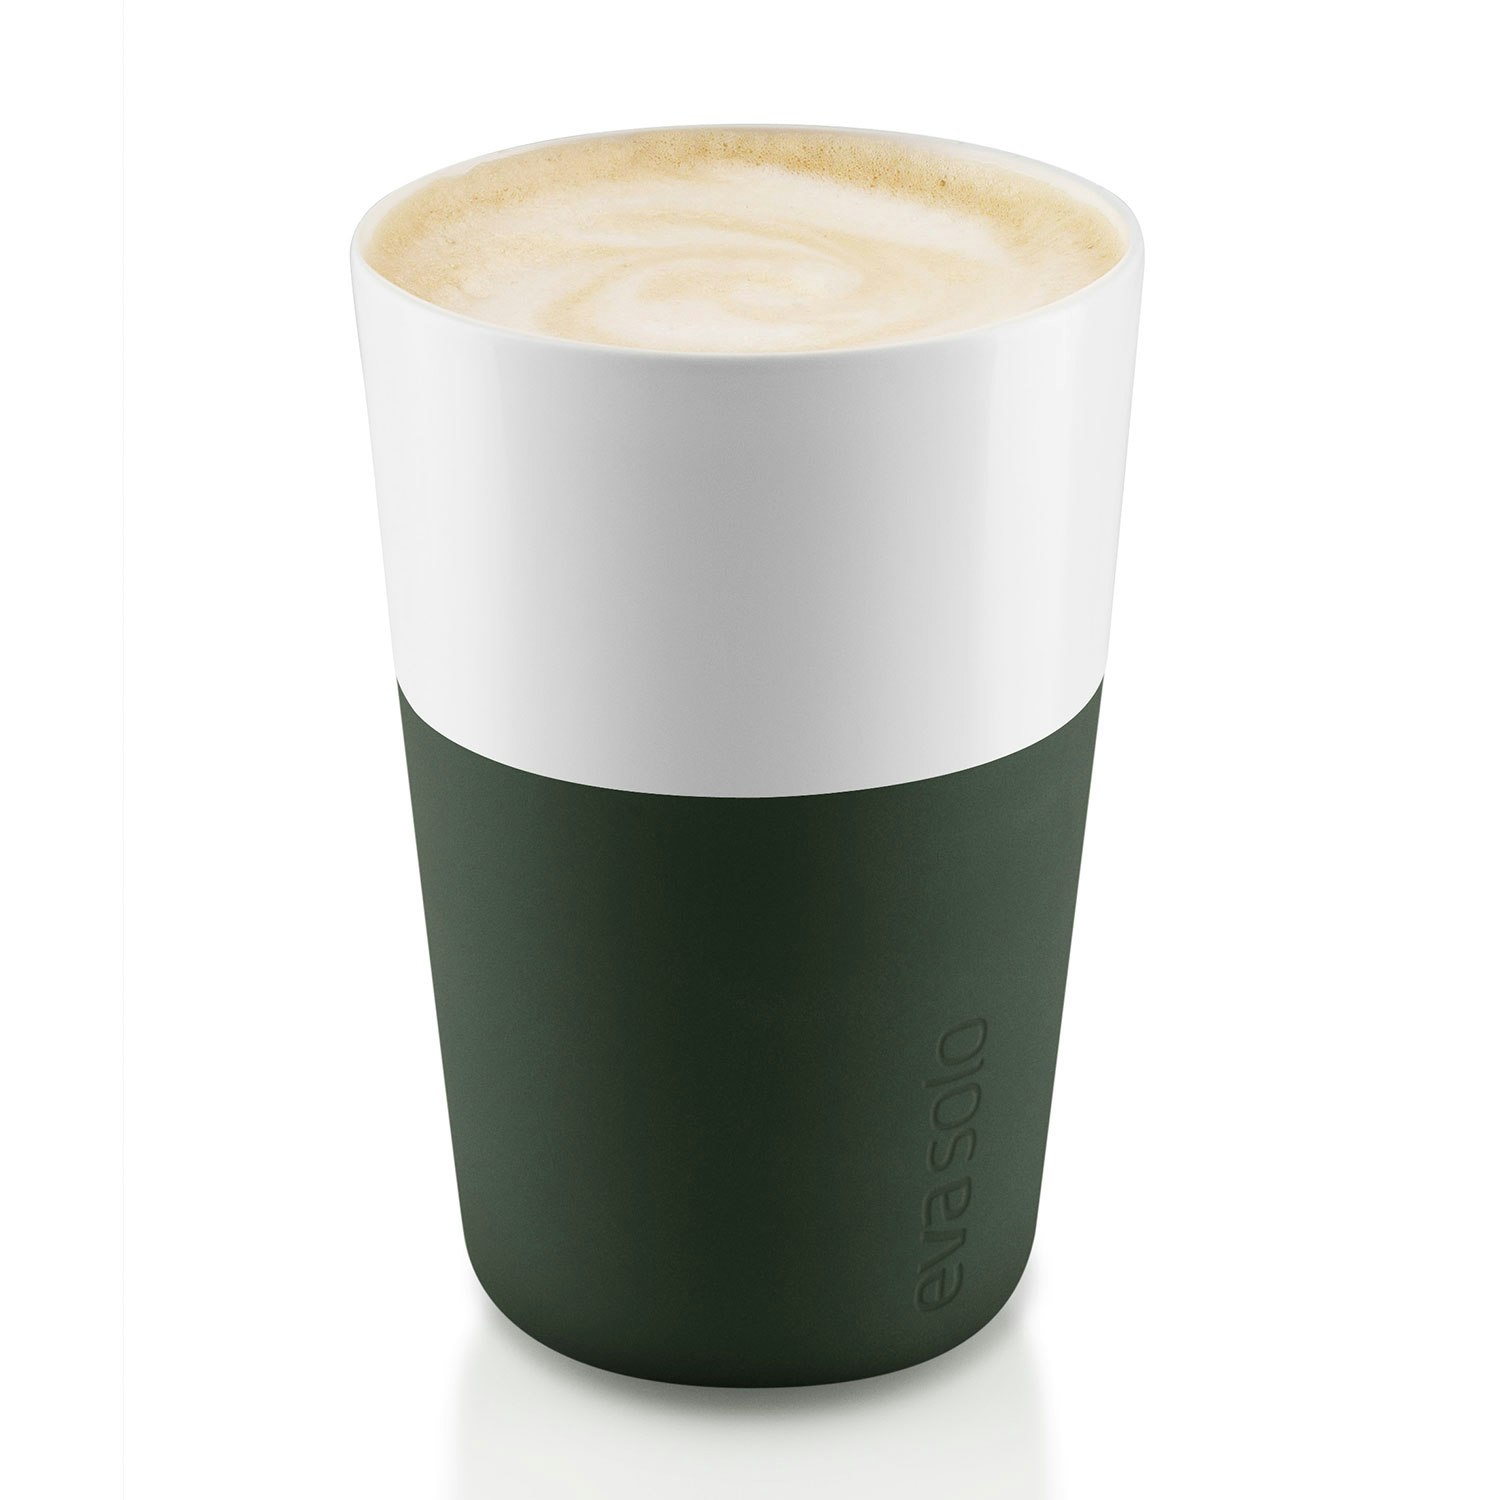 https://royaldesign.com/image/2/eva-solo-cafe-latte-mug-36-cl-2-pack-7